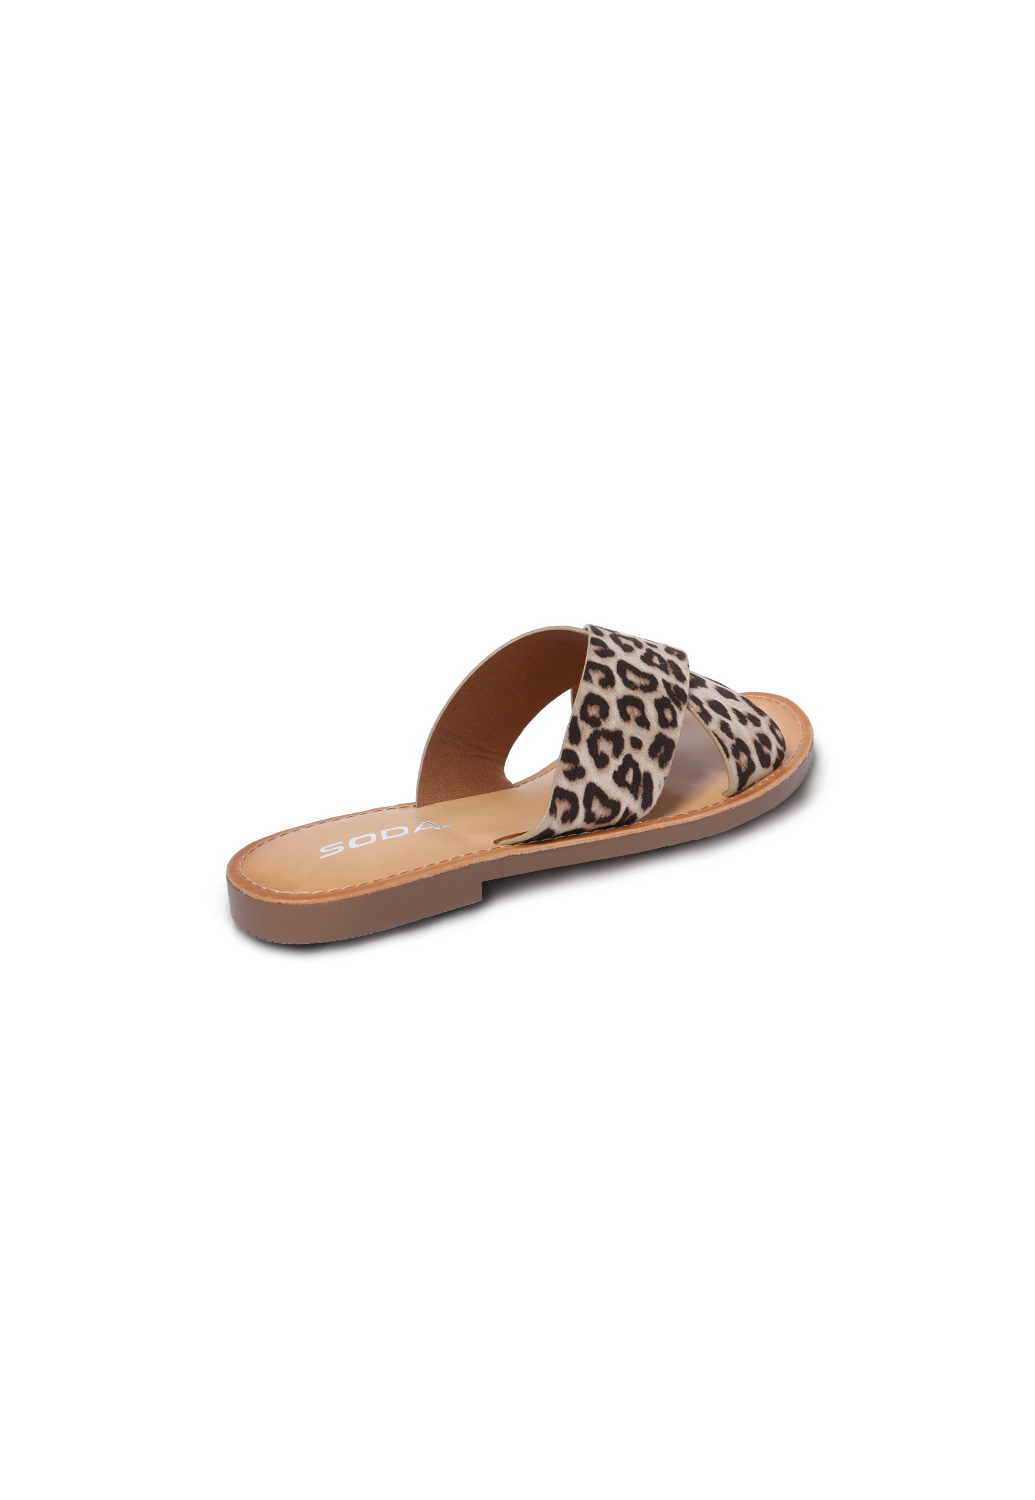 Cheetah Print Slide Sandals